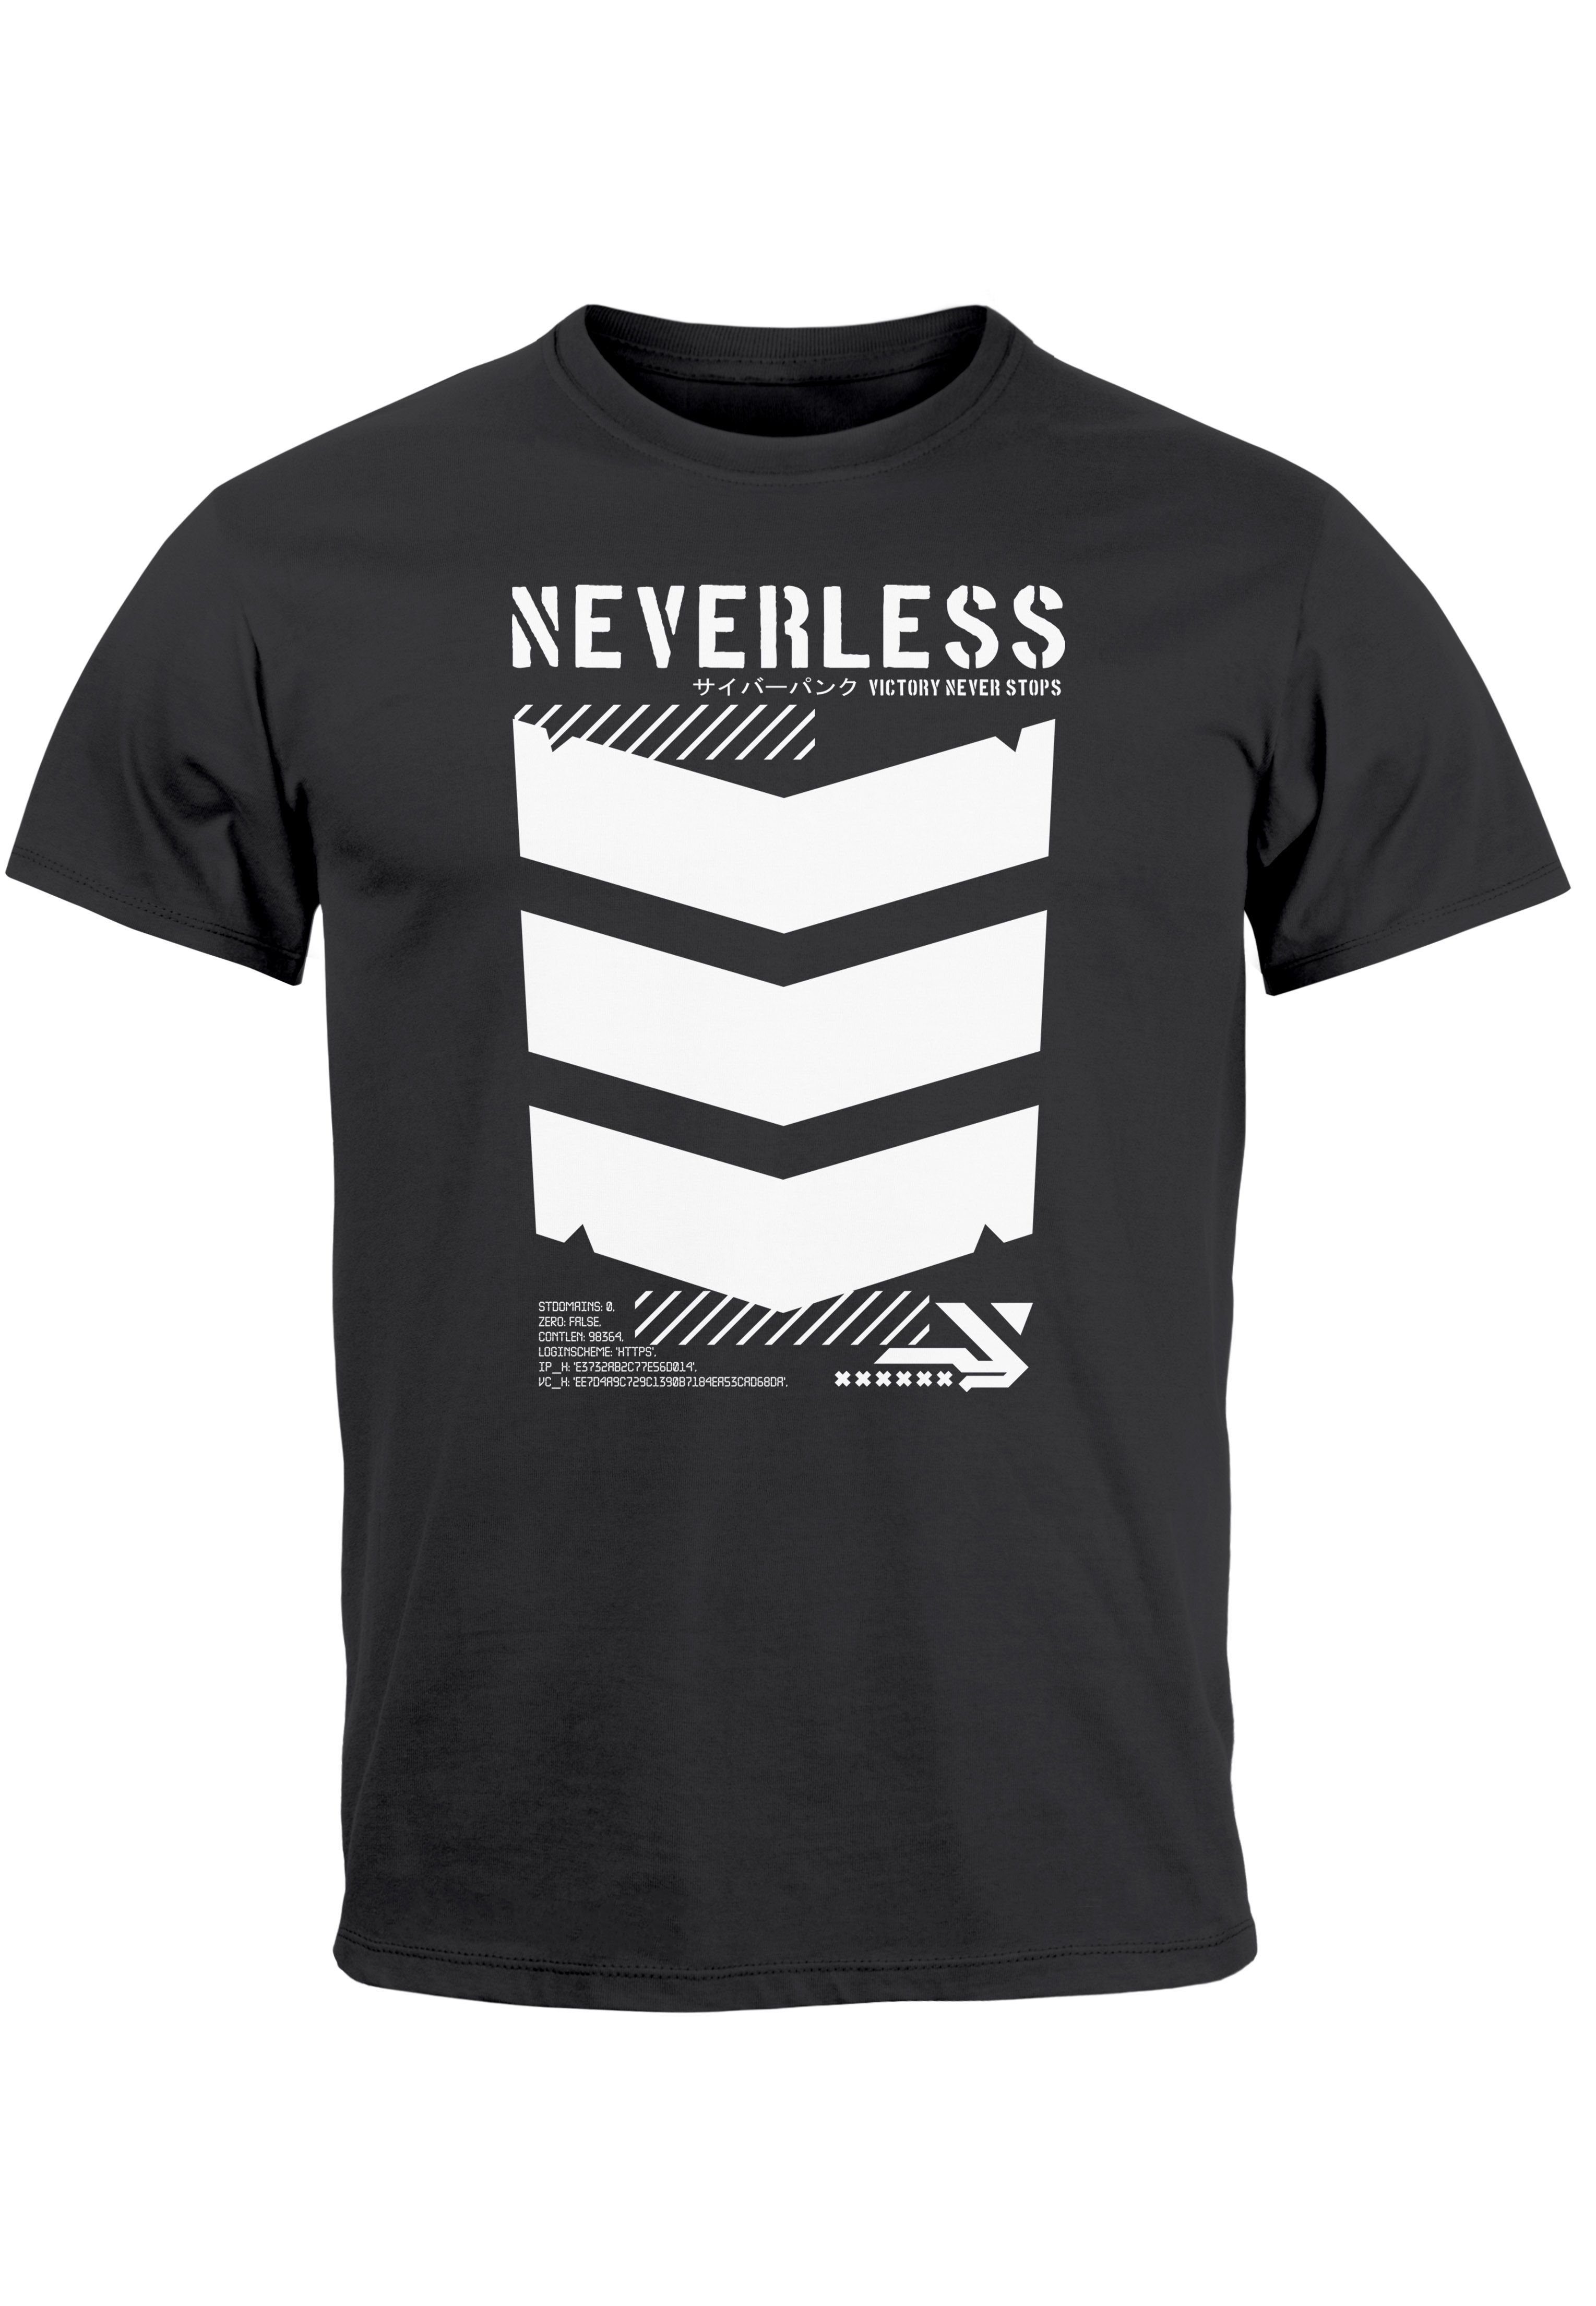 Neverless Print-Shirt Herren T-Shirt Techwear Trend Motive Japanese Streetstyle Military Fas mit Print dunkelgrau